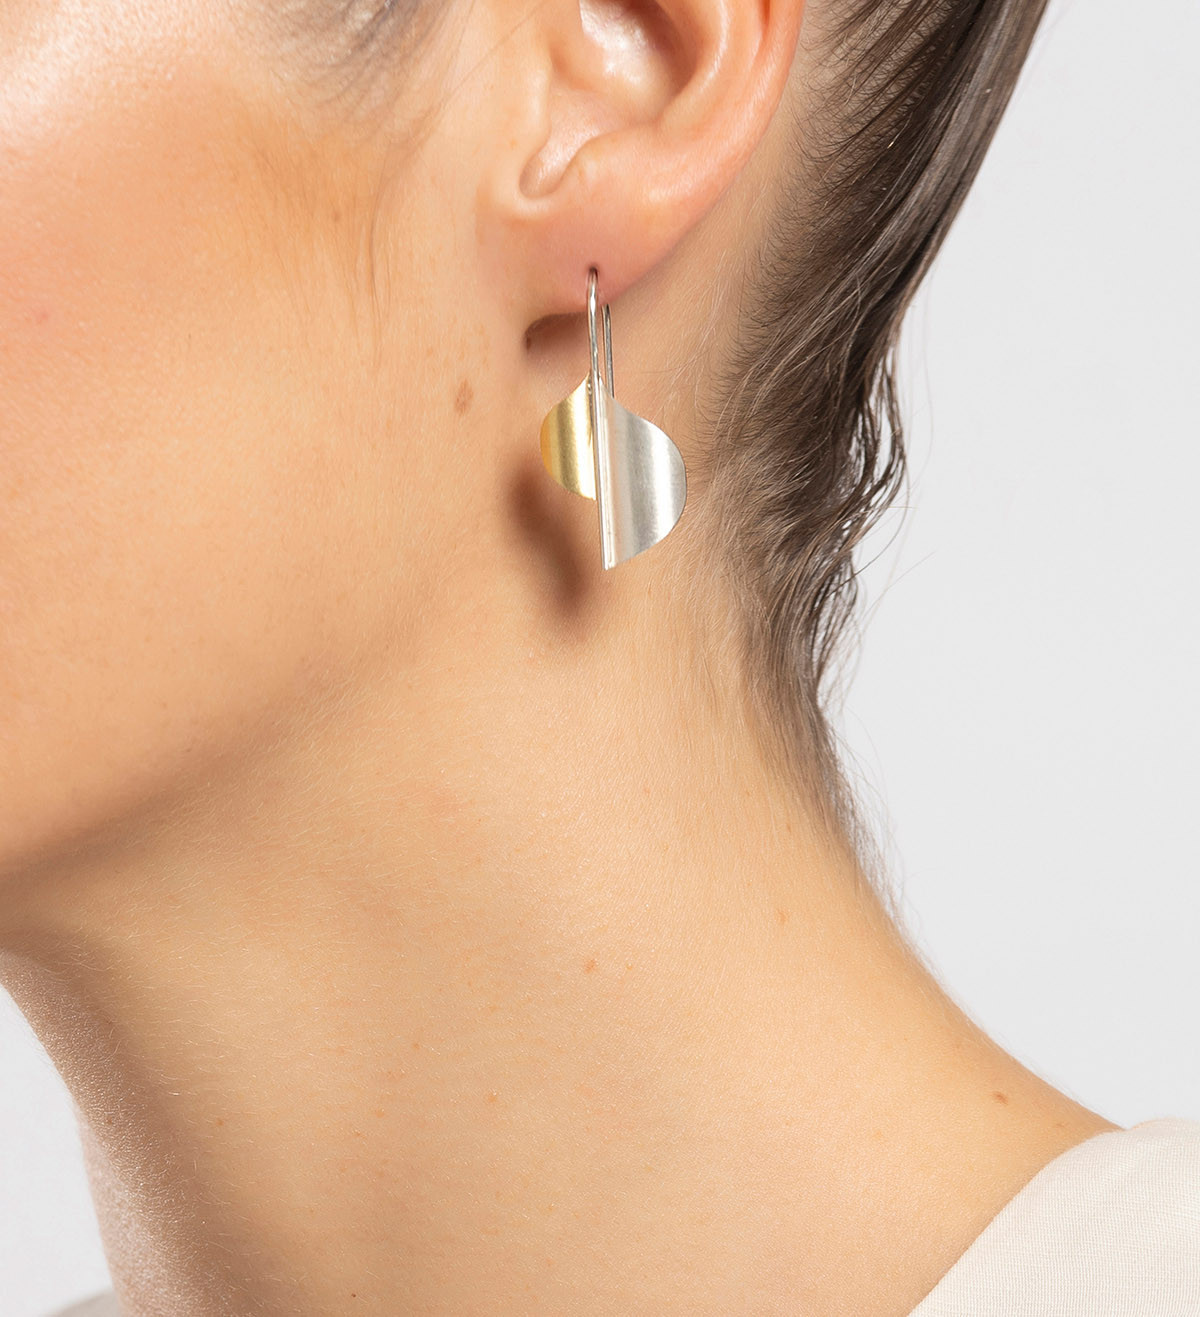 18k gold and silver earrings Seda 30mm